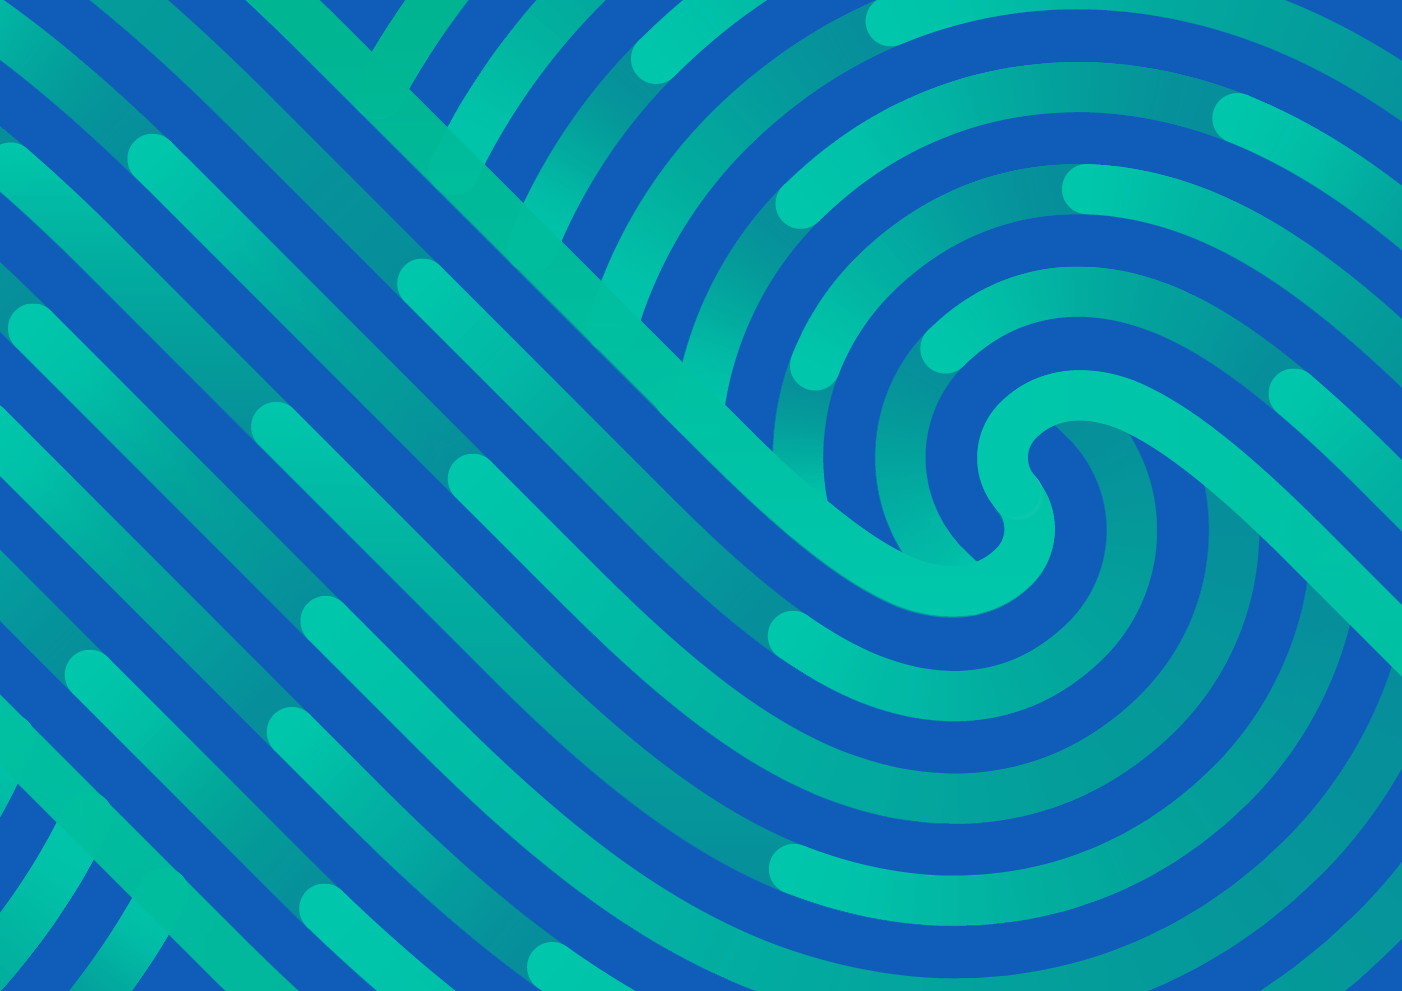 PHARMAC brand spiral motif